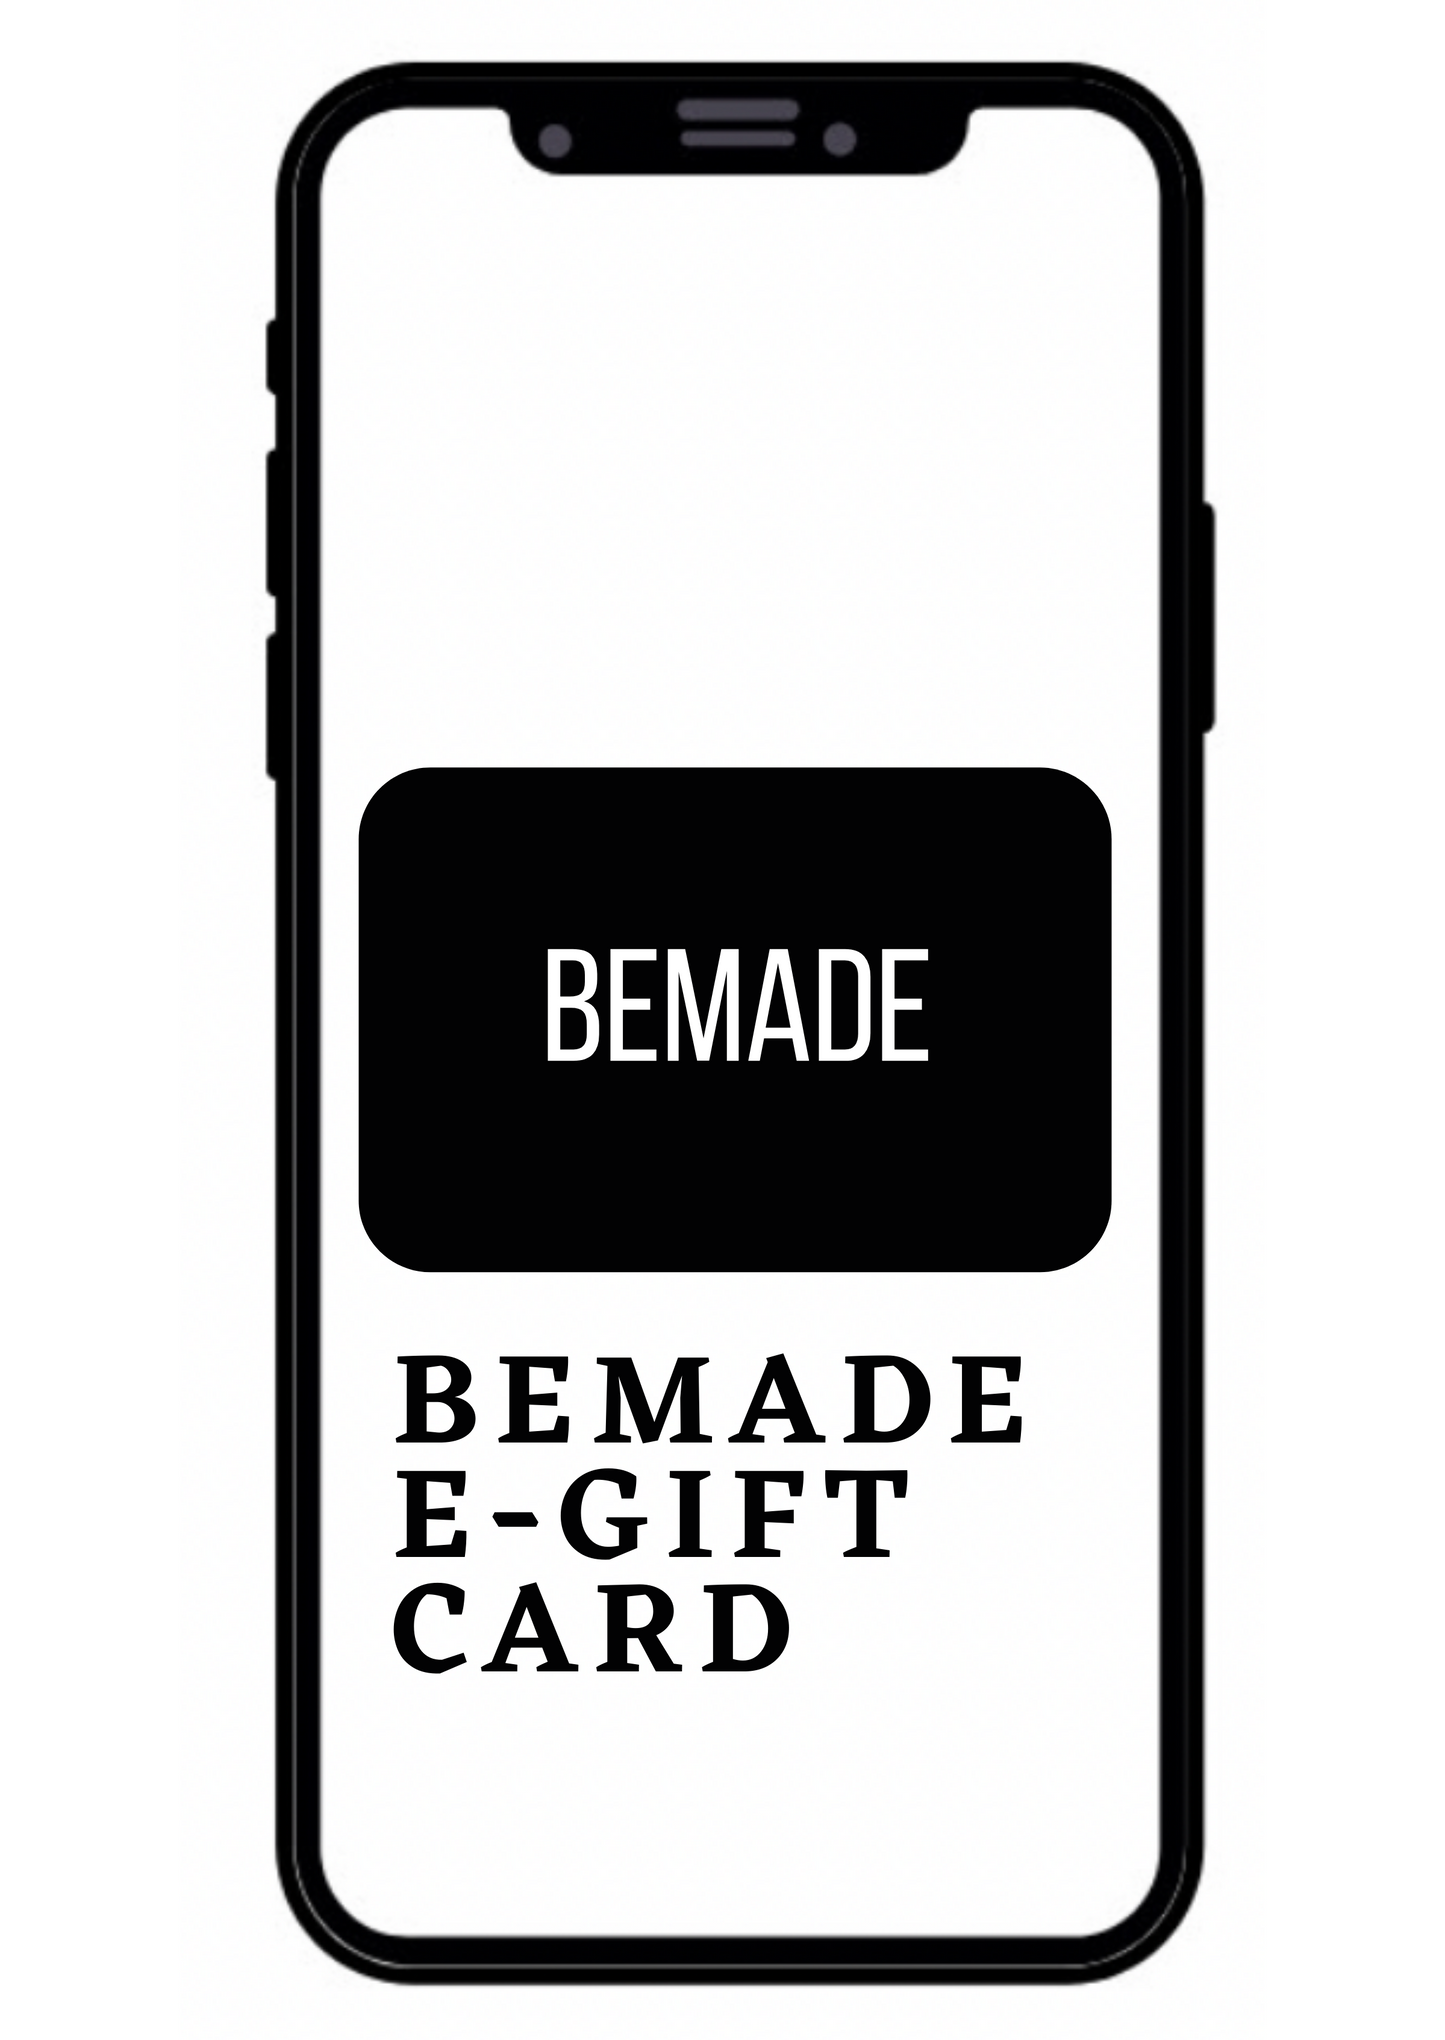 BEMADE E-GIFT CARD - BEMADE